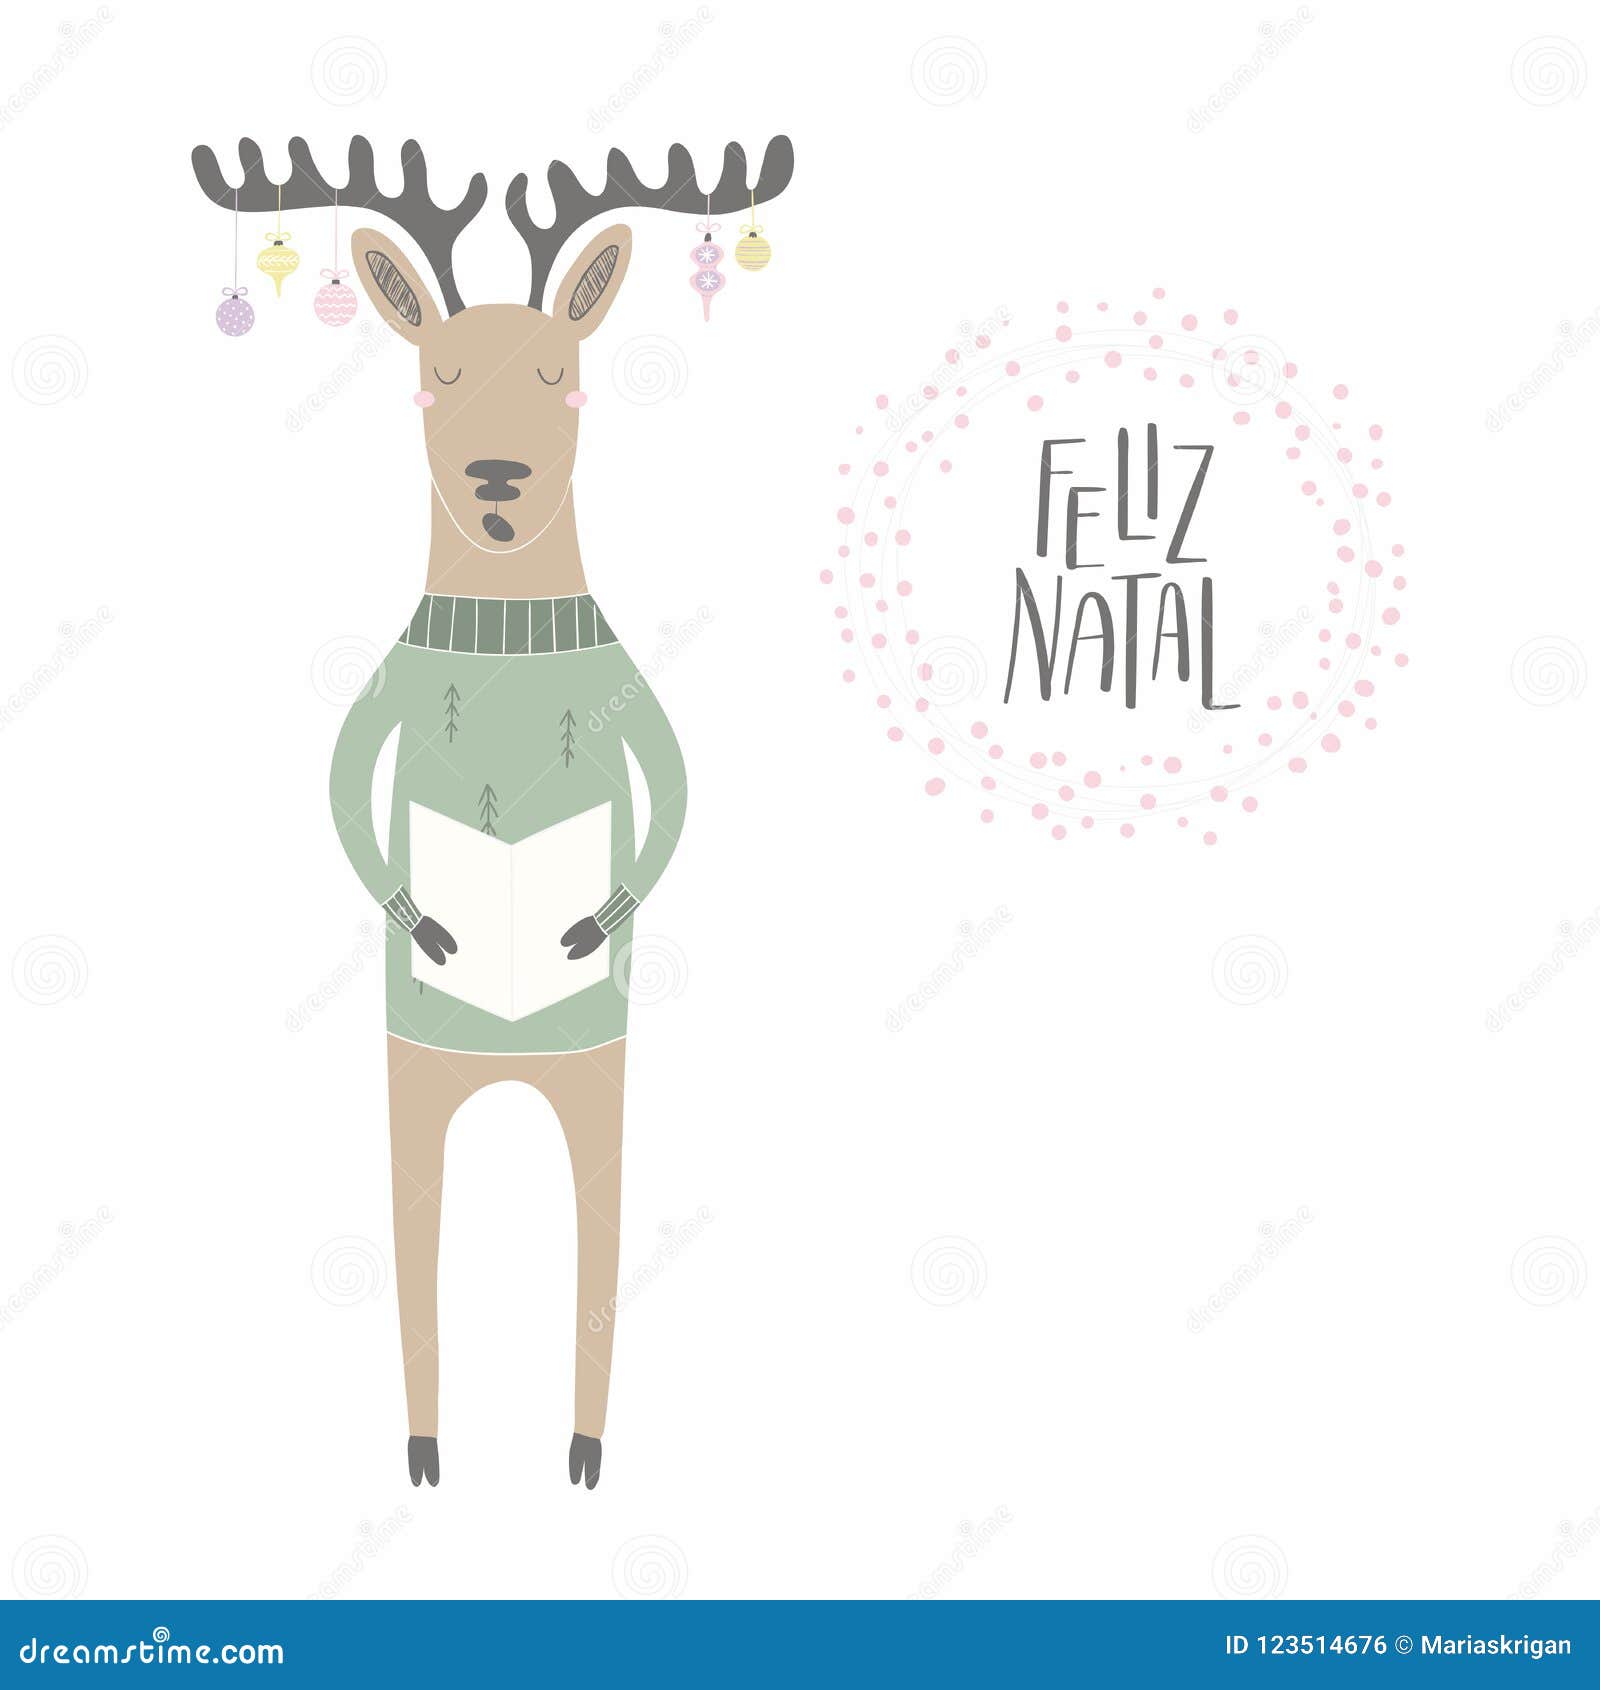 Funny Singing Reindeer Christmas Card Stock Vector - Illustration of carol,  antlers: 123514676